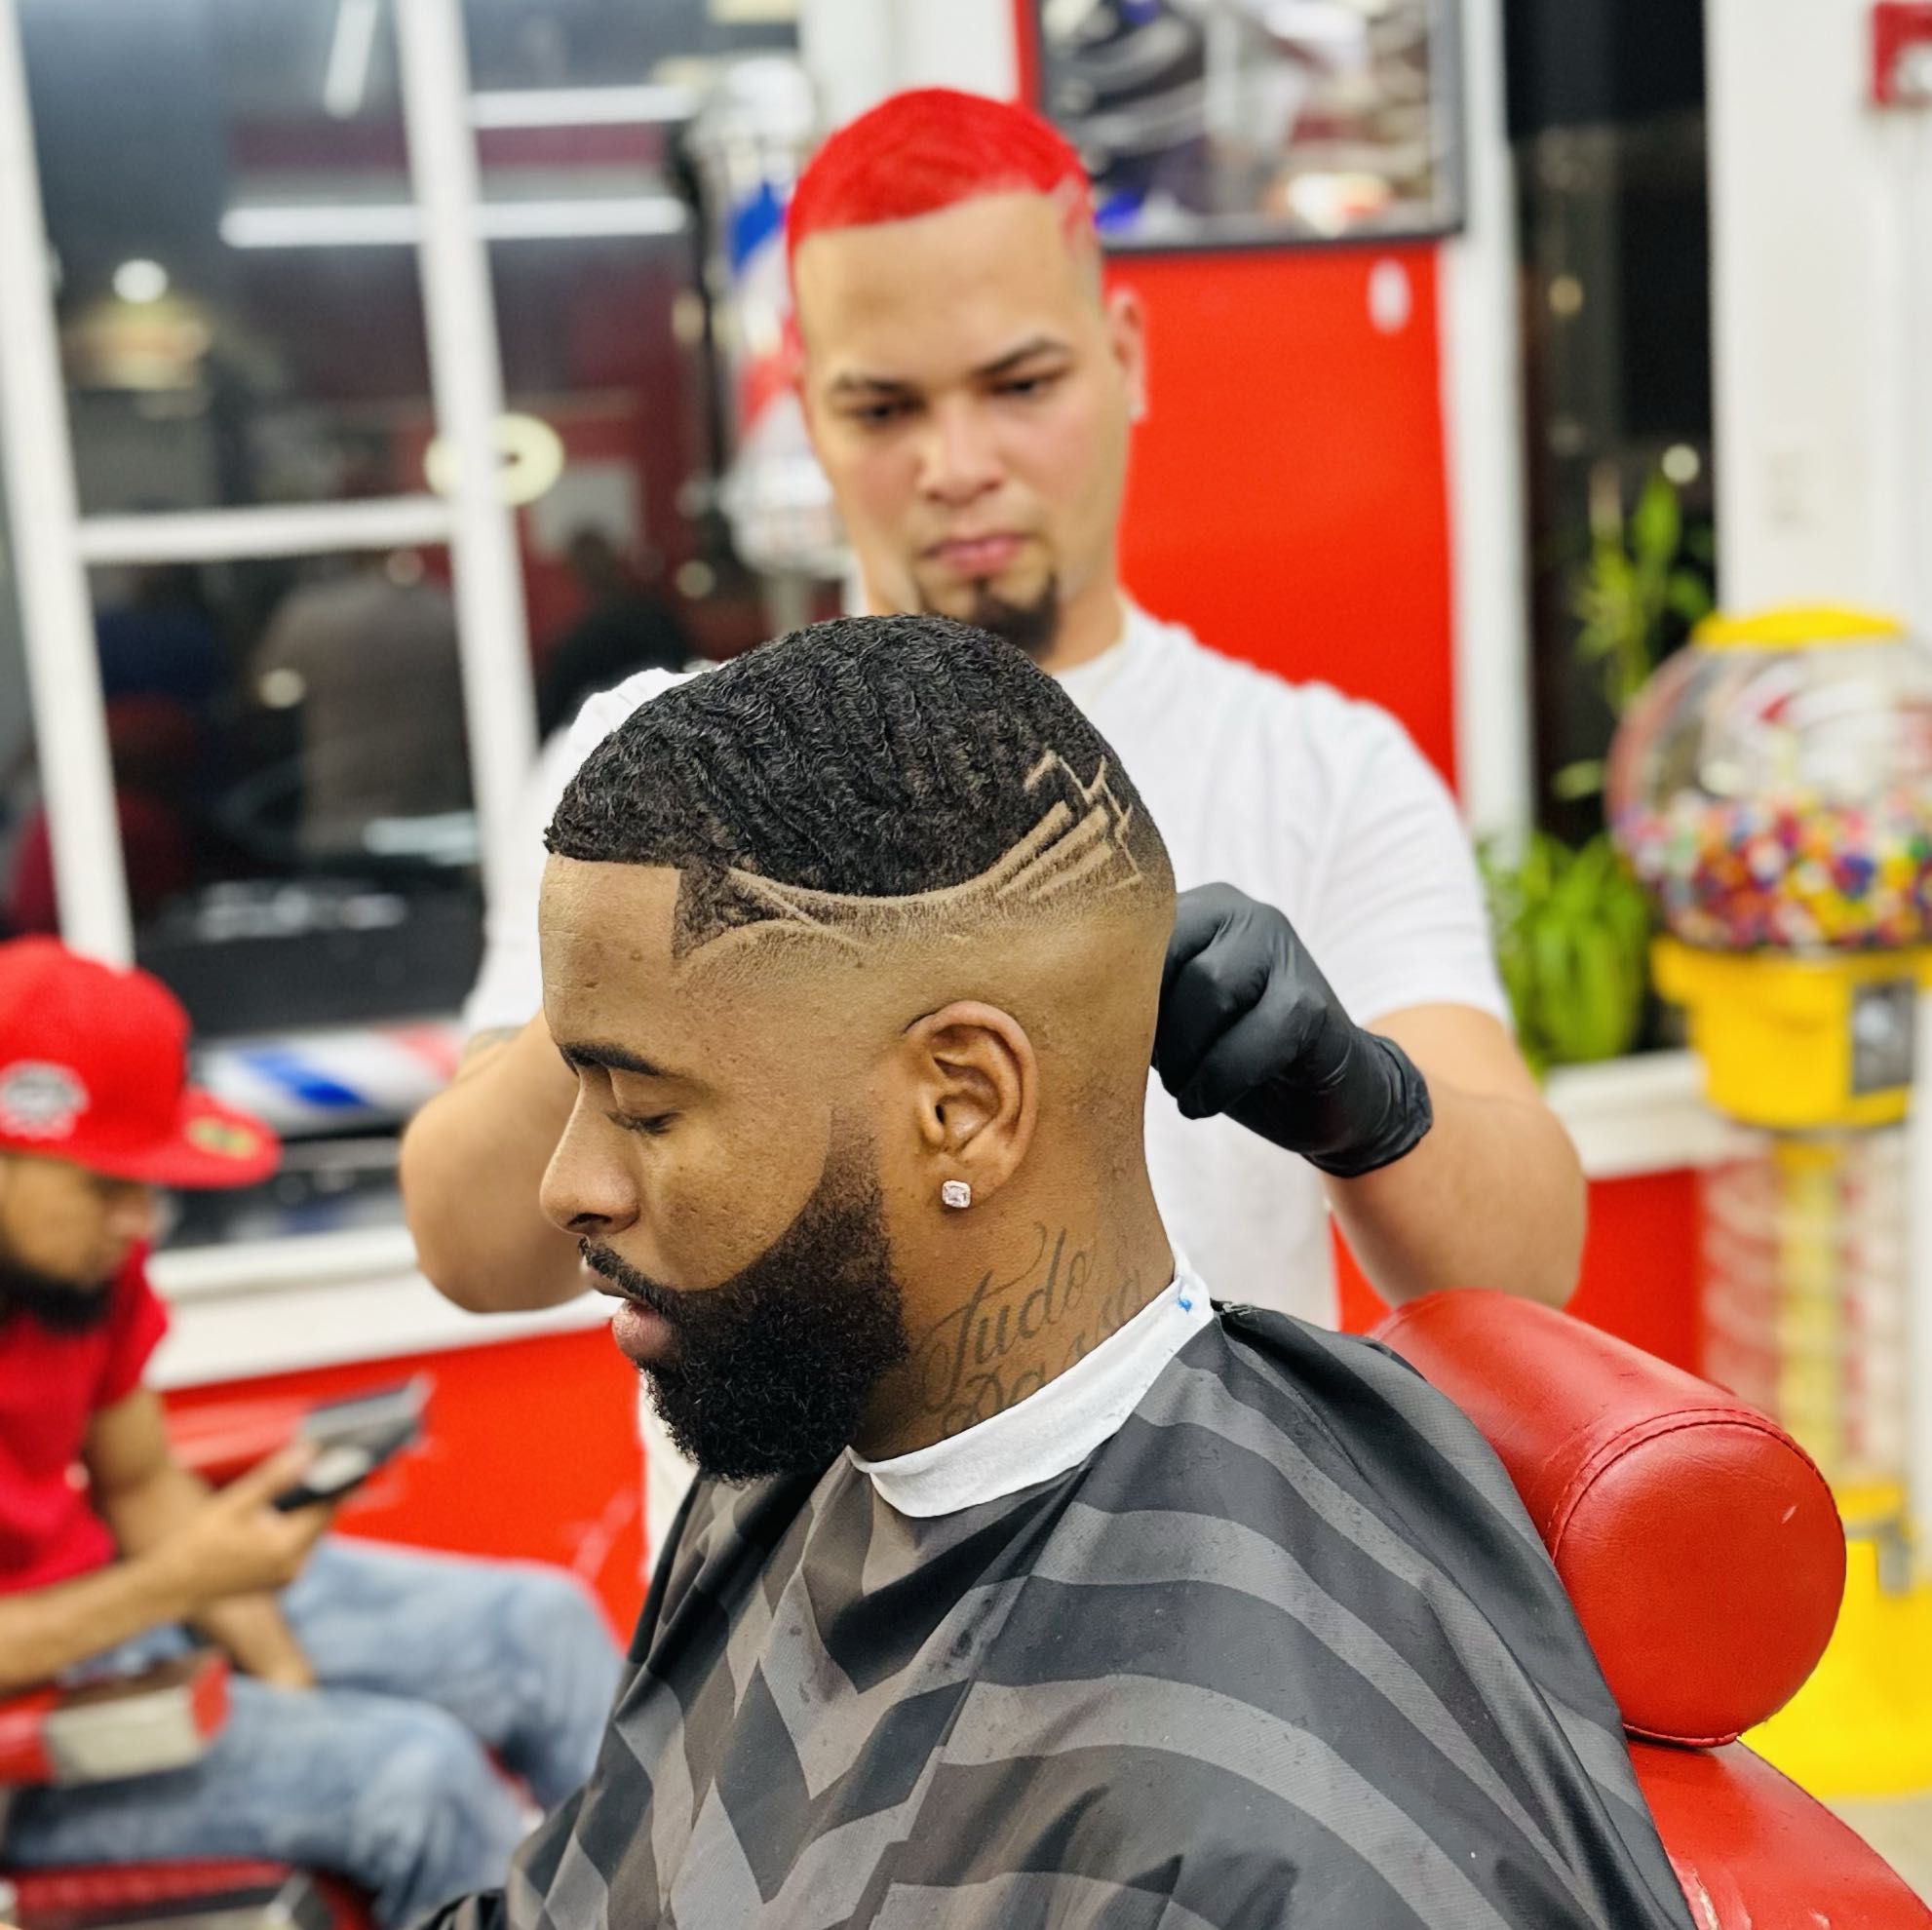 Luis barber - Upscale cutz barbershop